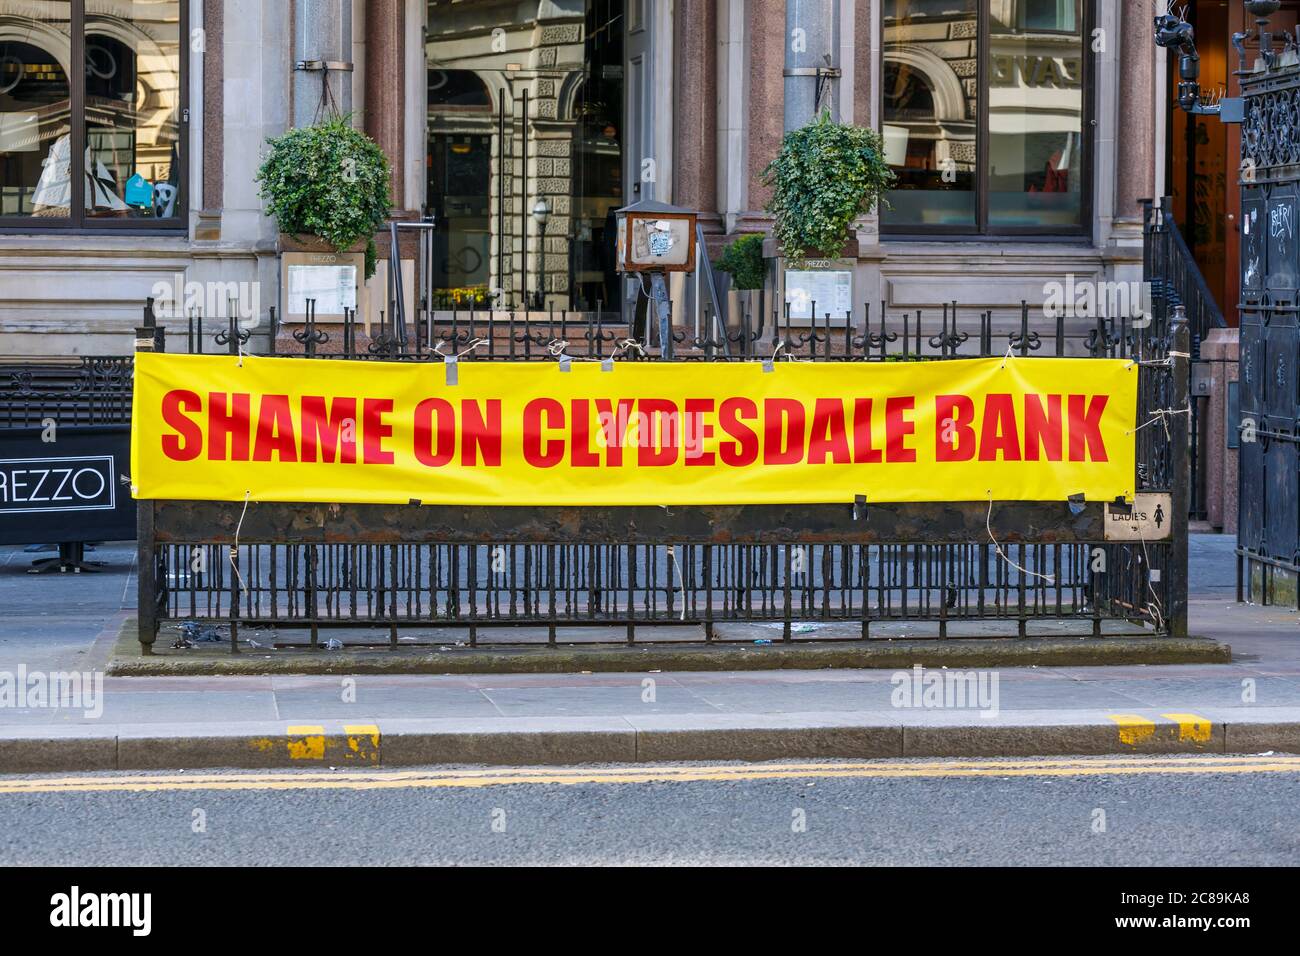 A Shame On Clydesdale Bank sign, Saint Vincent Place, Glasgow, Scotland, UK Stock Photo